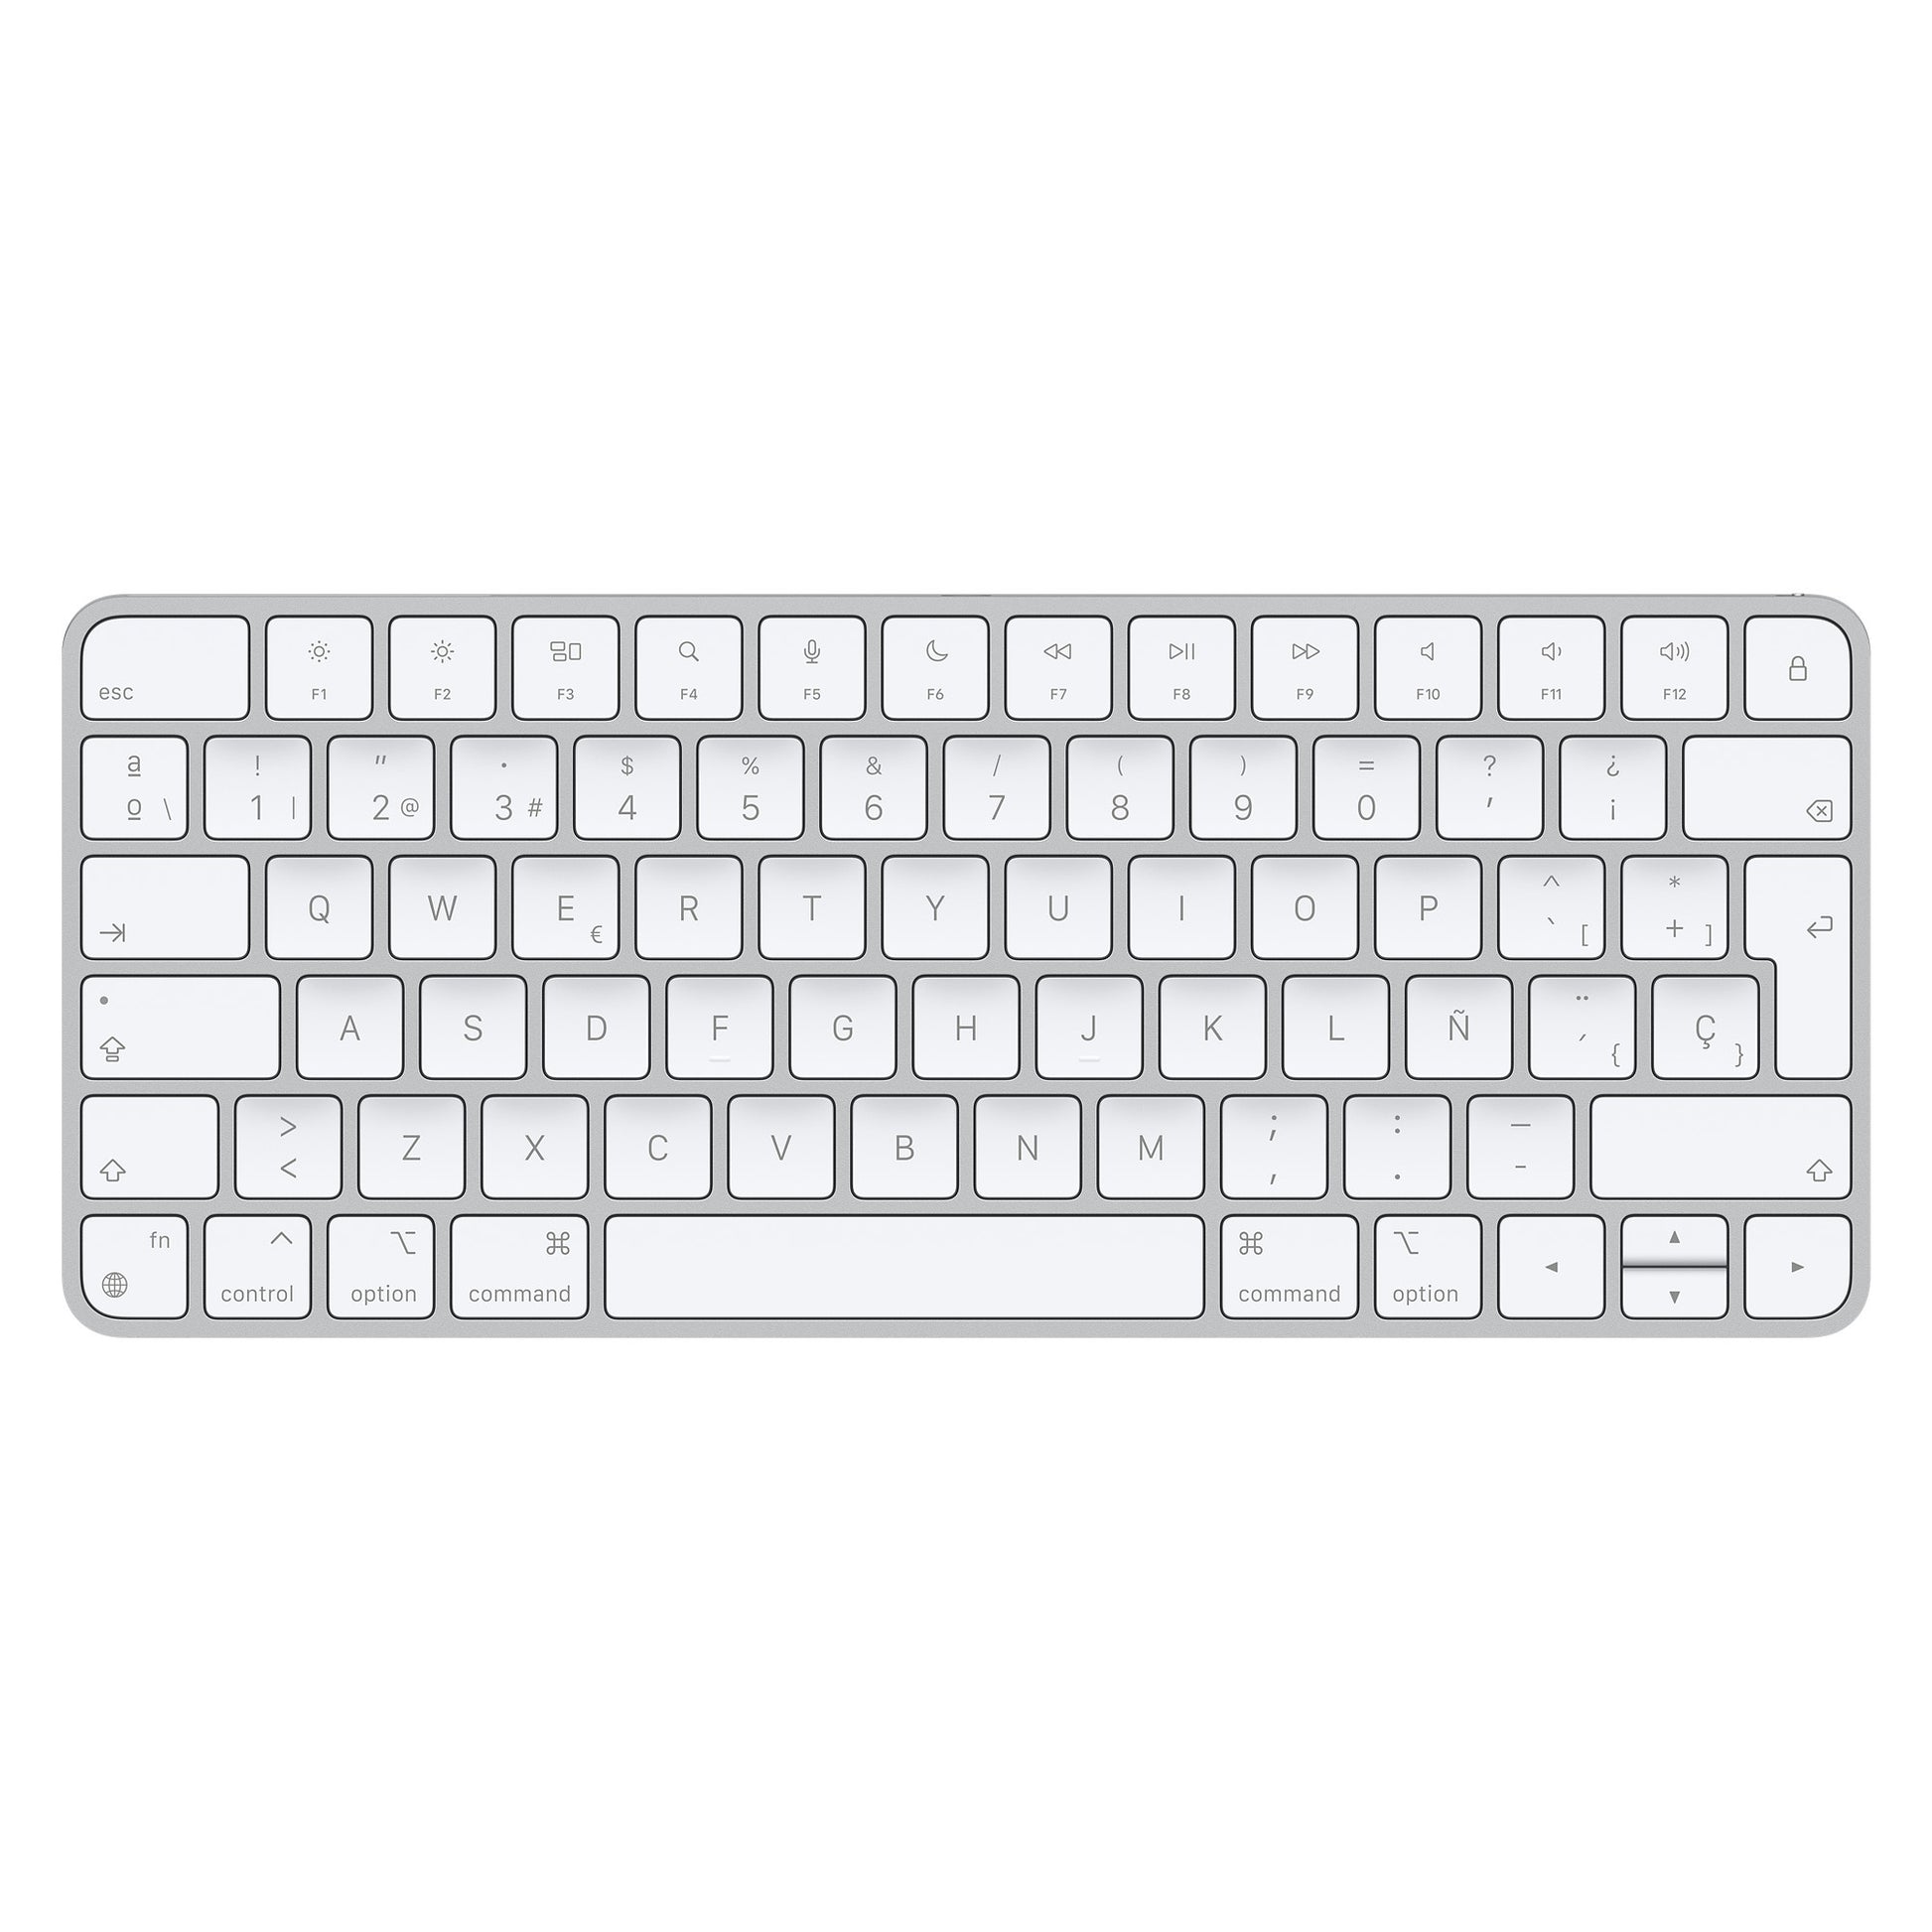 Apple Magic Keyboard - Silber - Deutsch